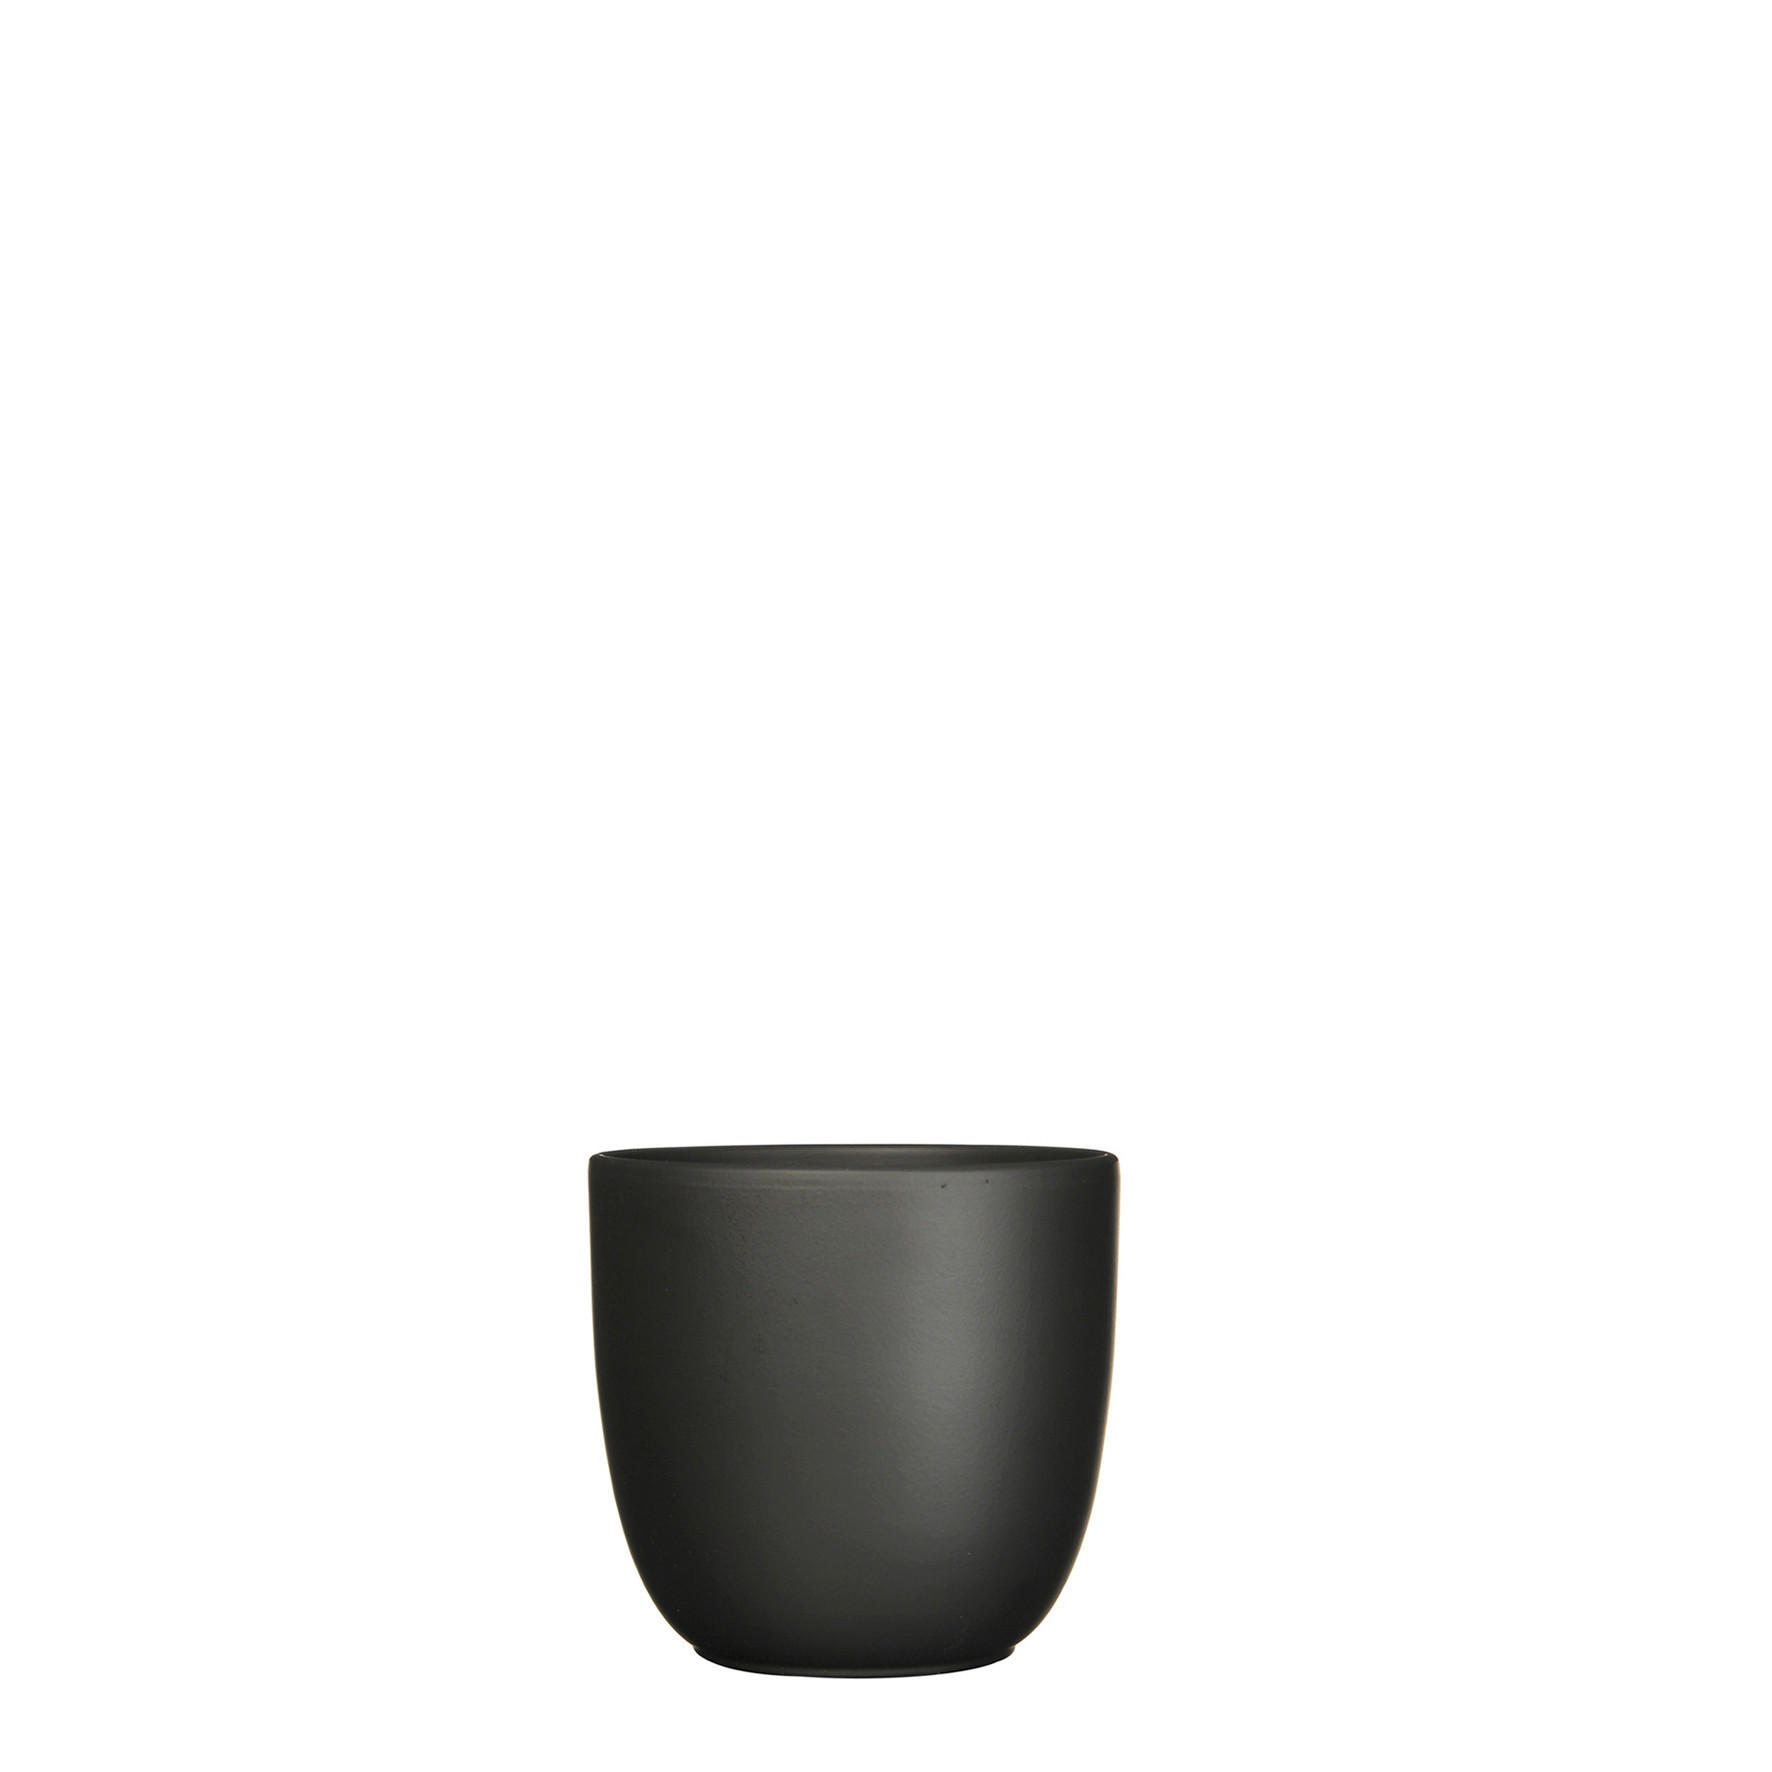 TEGLA ZA BILJKE  keramika  - crna, Basics, keramika (13.5/13cm)